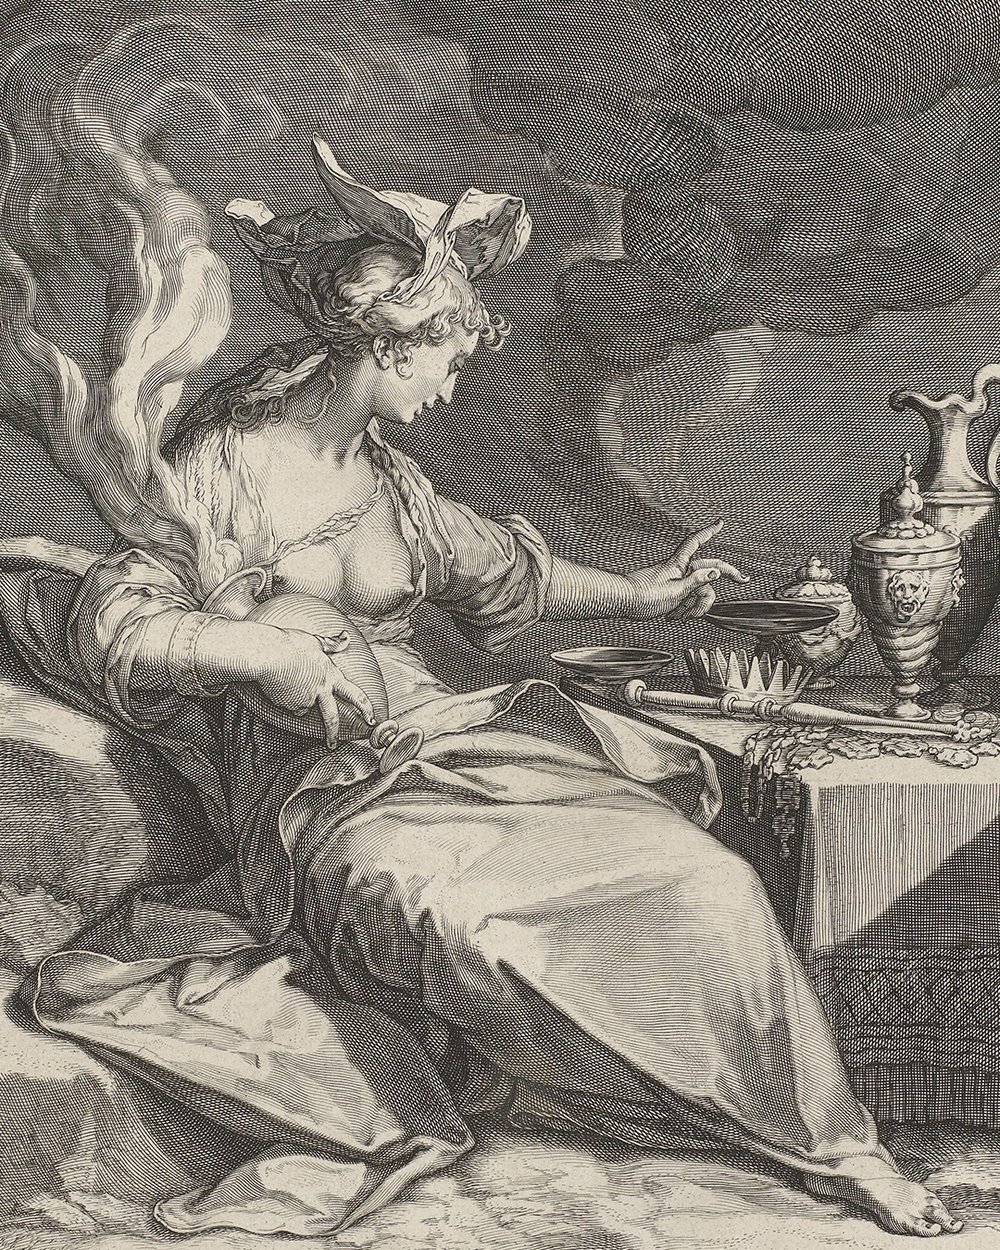 ''Vanity of Vanities It's all Vanity'' (1575 - 1607)